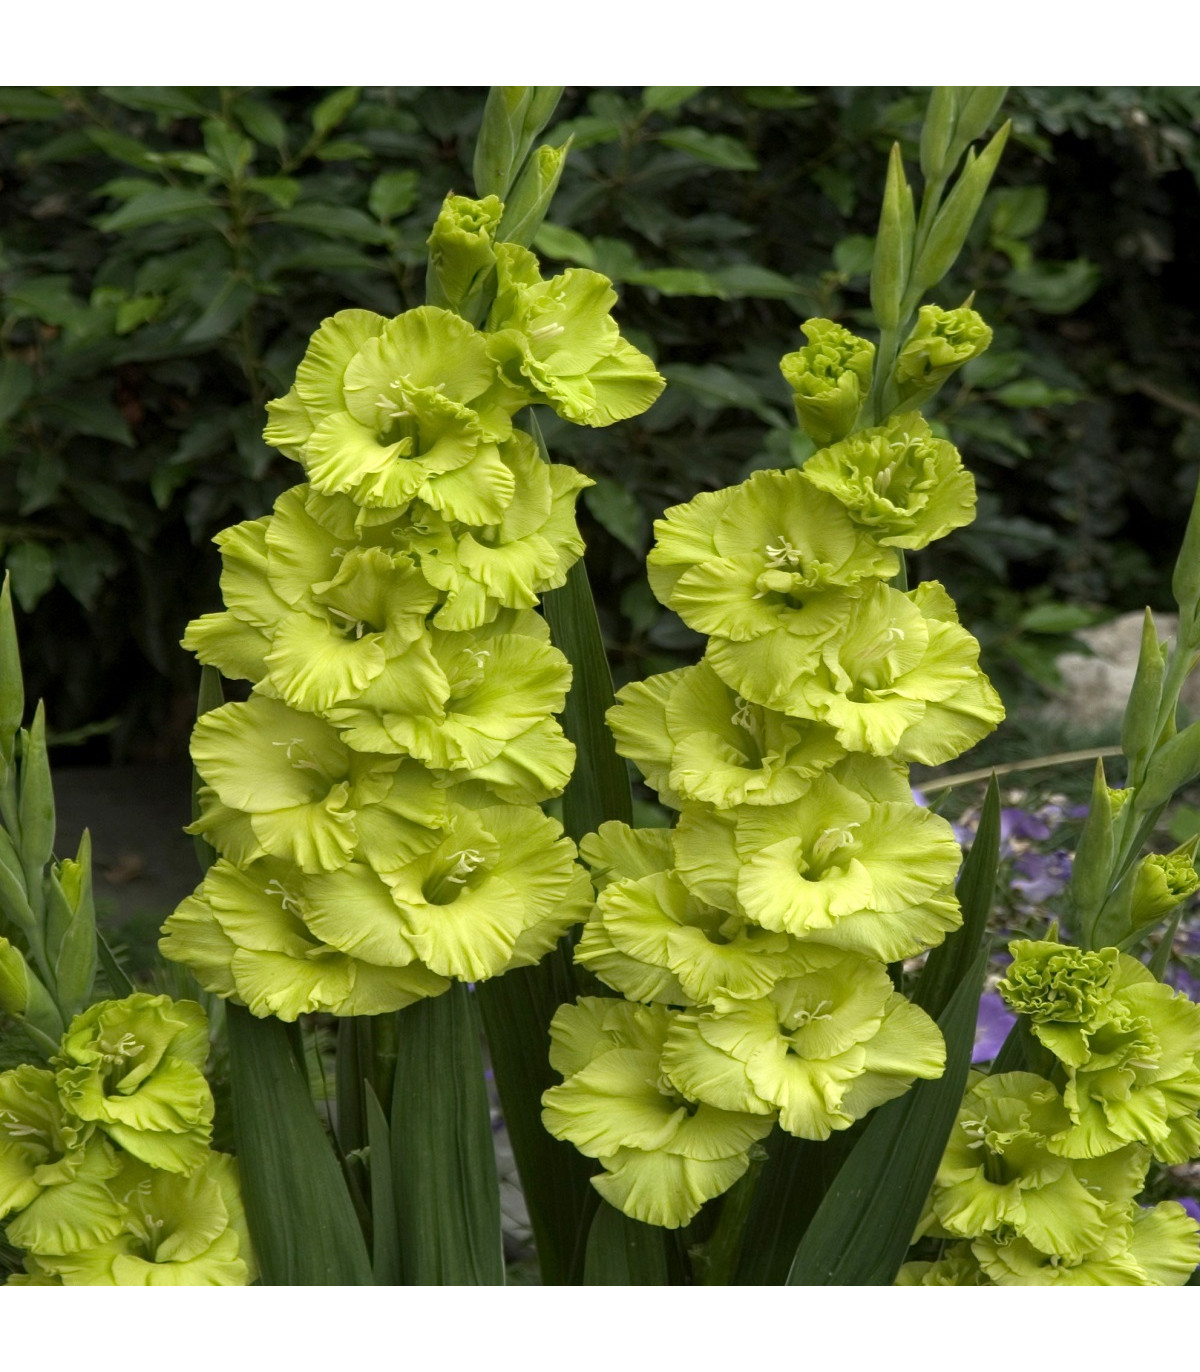 Gladiola veľkokvetá - Gladiolus Green Star - gladioly - hľuzy gladioly - 3 ks